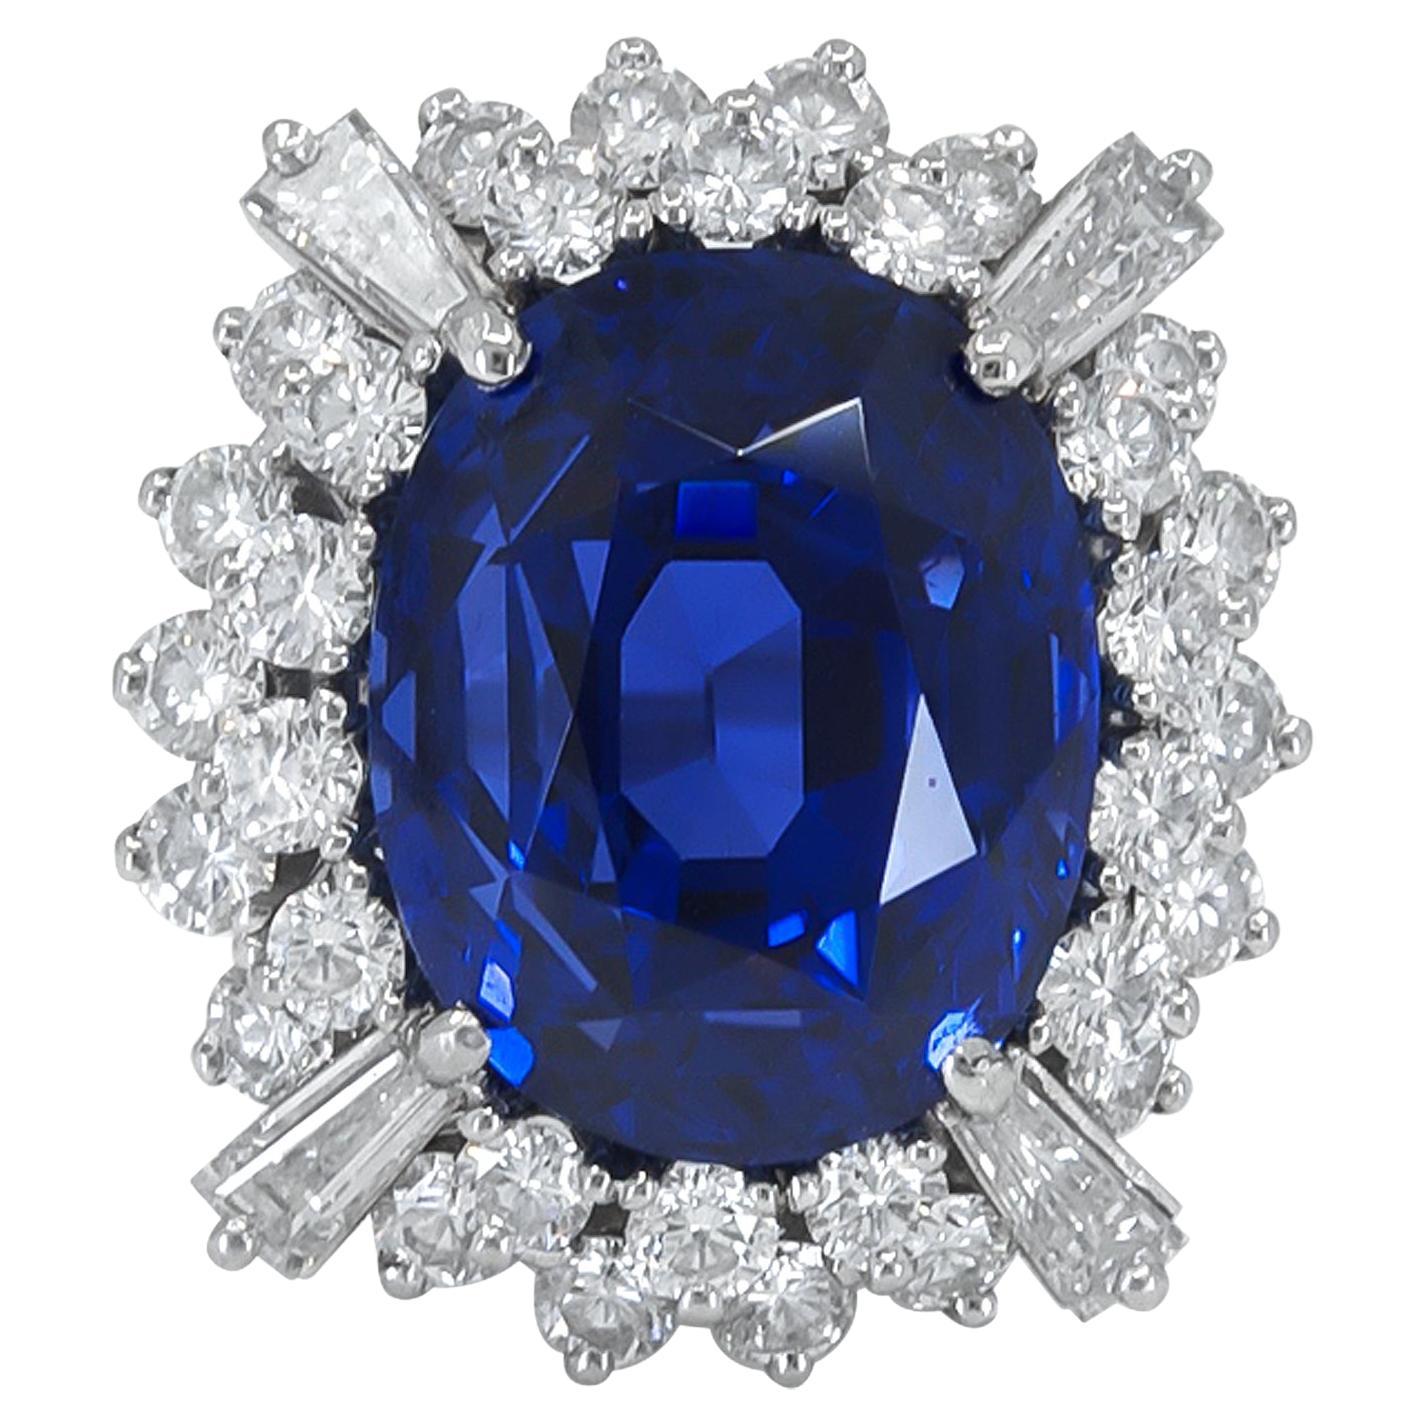 Spectra Fine Jewelry Certified 19.28 Carat Ceylon Sapphire Diamond Ring